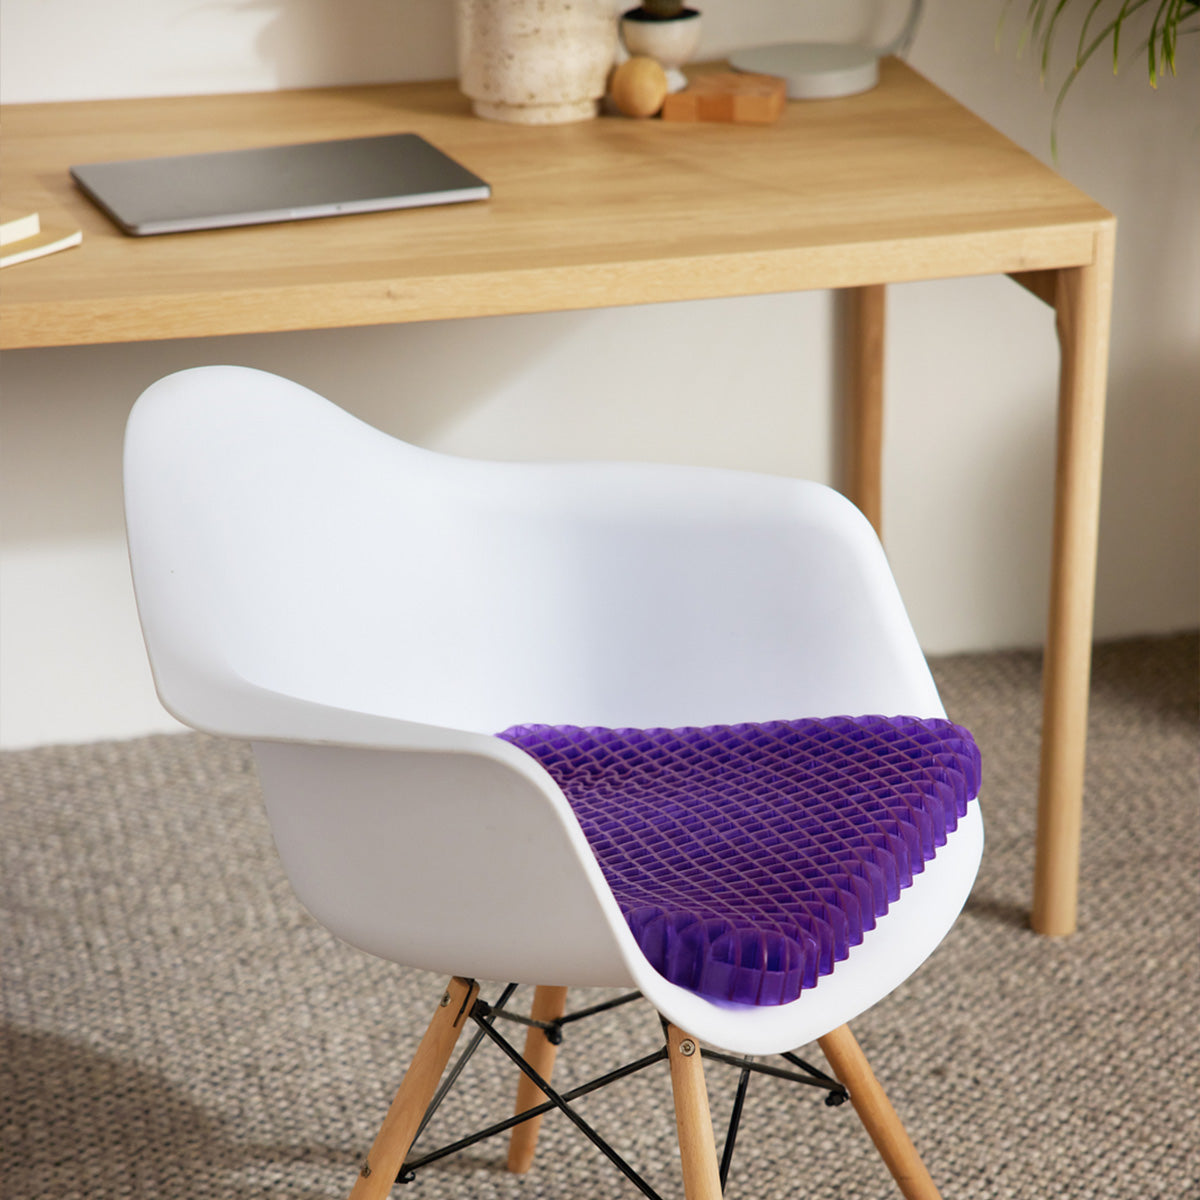 Purple Royal Seat Cushion GelFlex Grid On An Office Chair